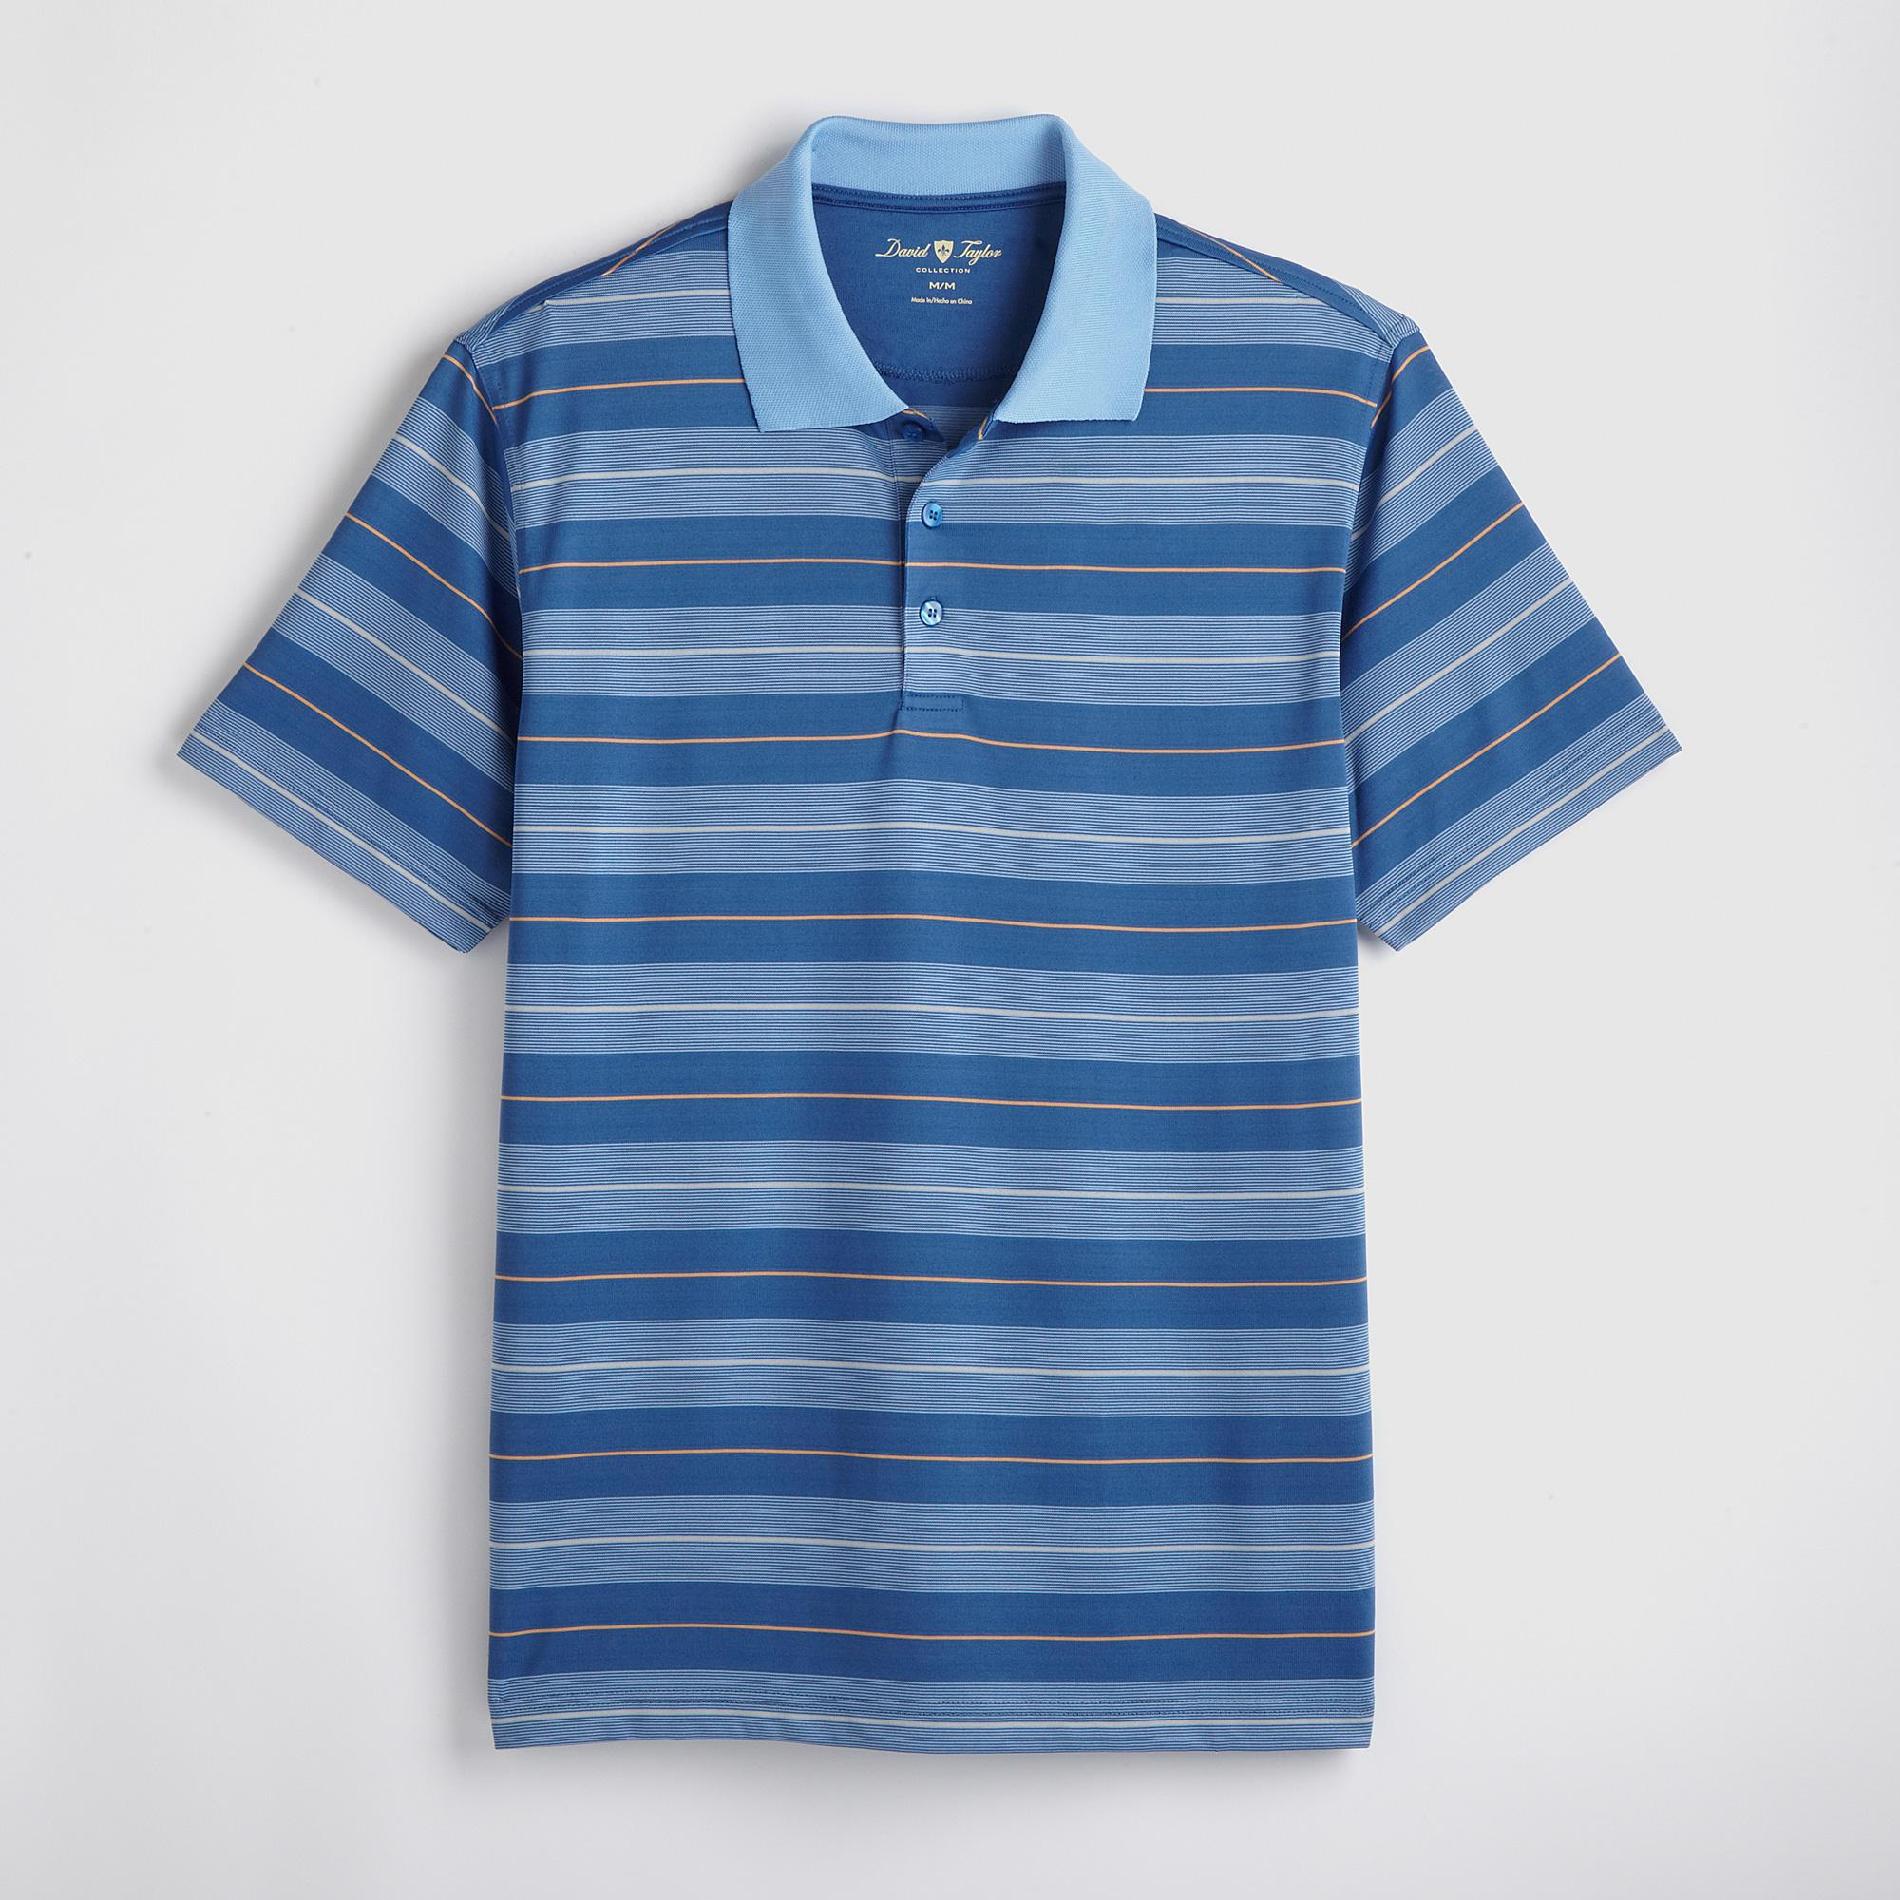 David Taylor Collection Men's Polo Shirt - Stripes